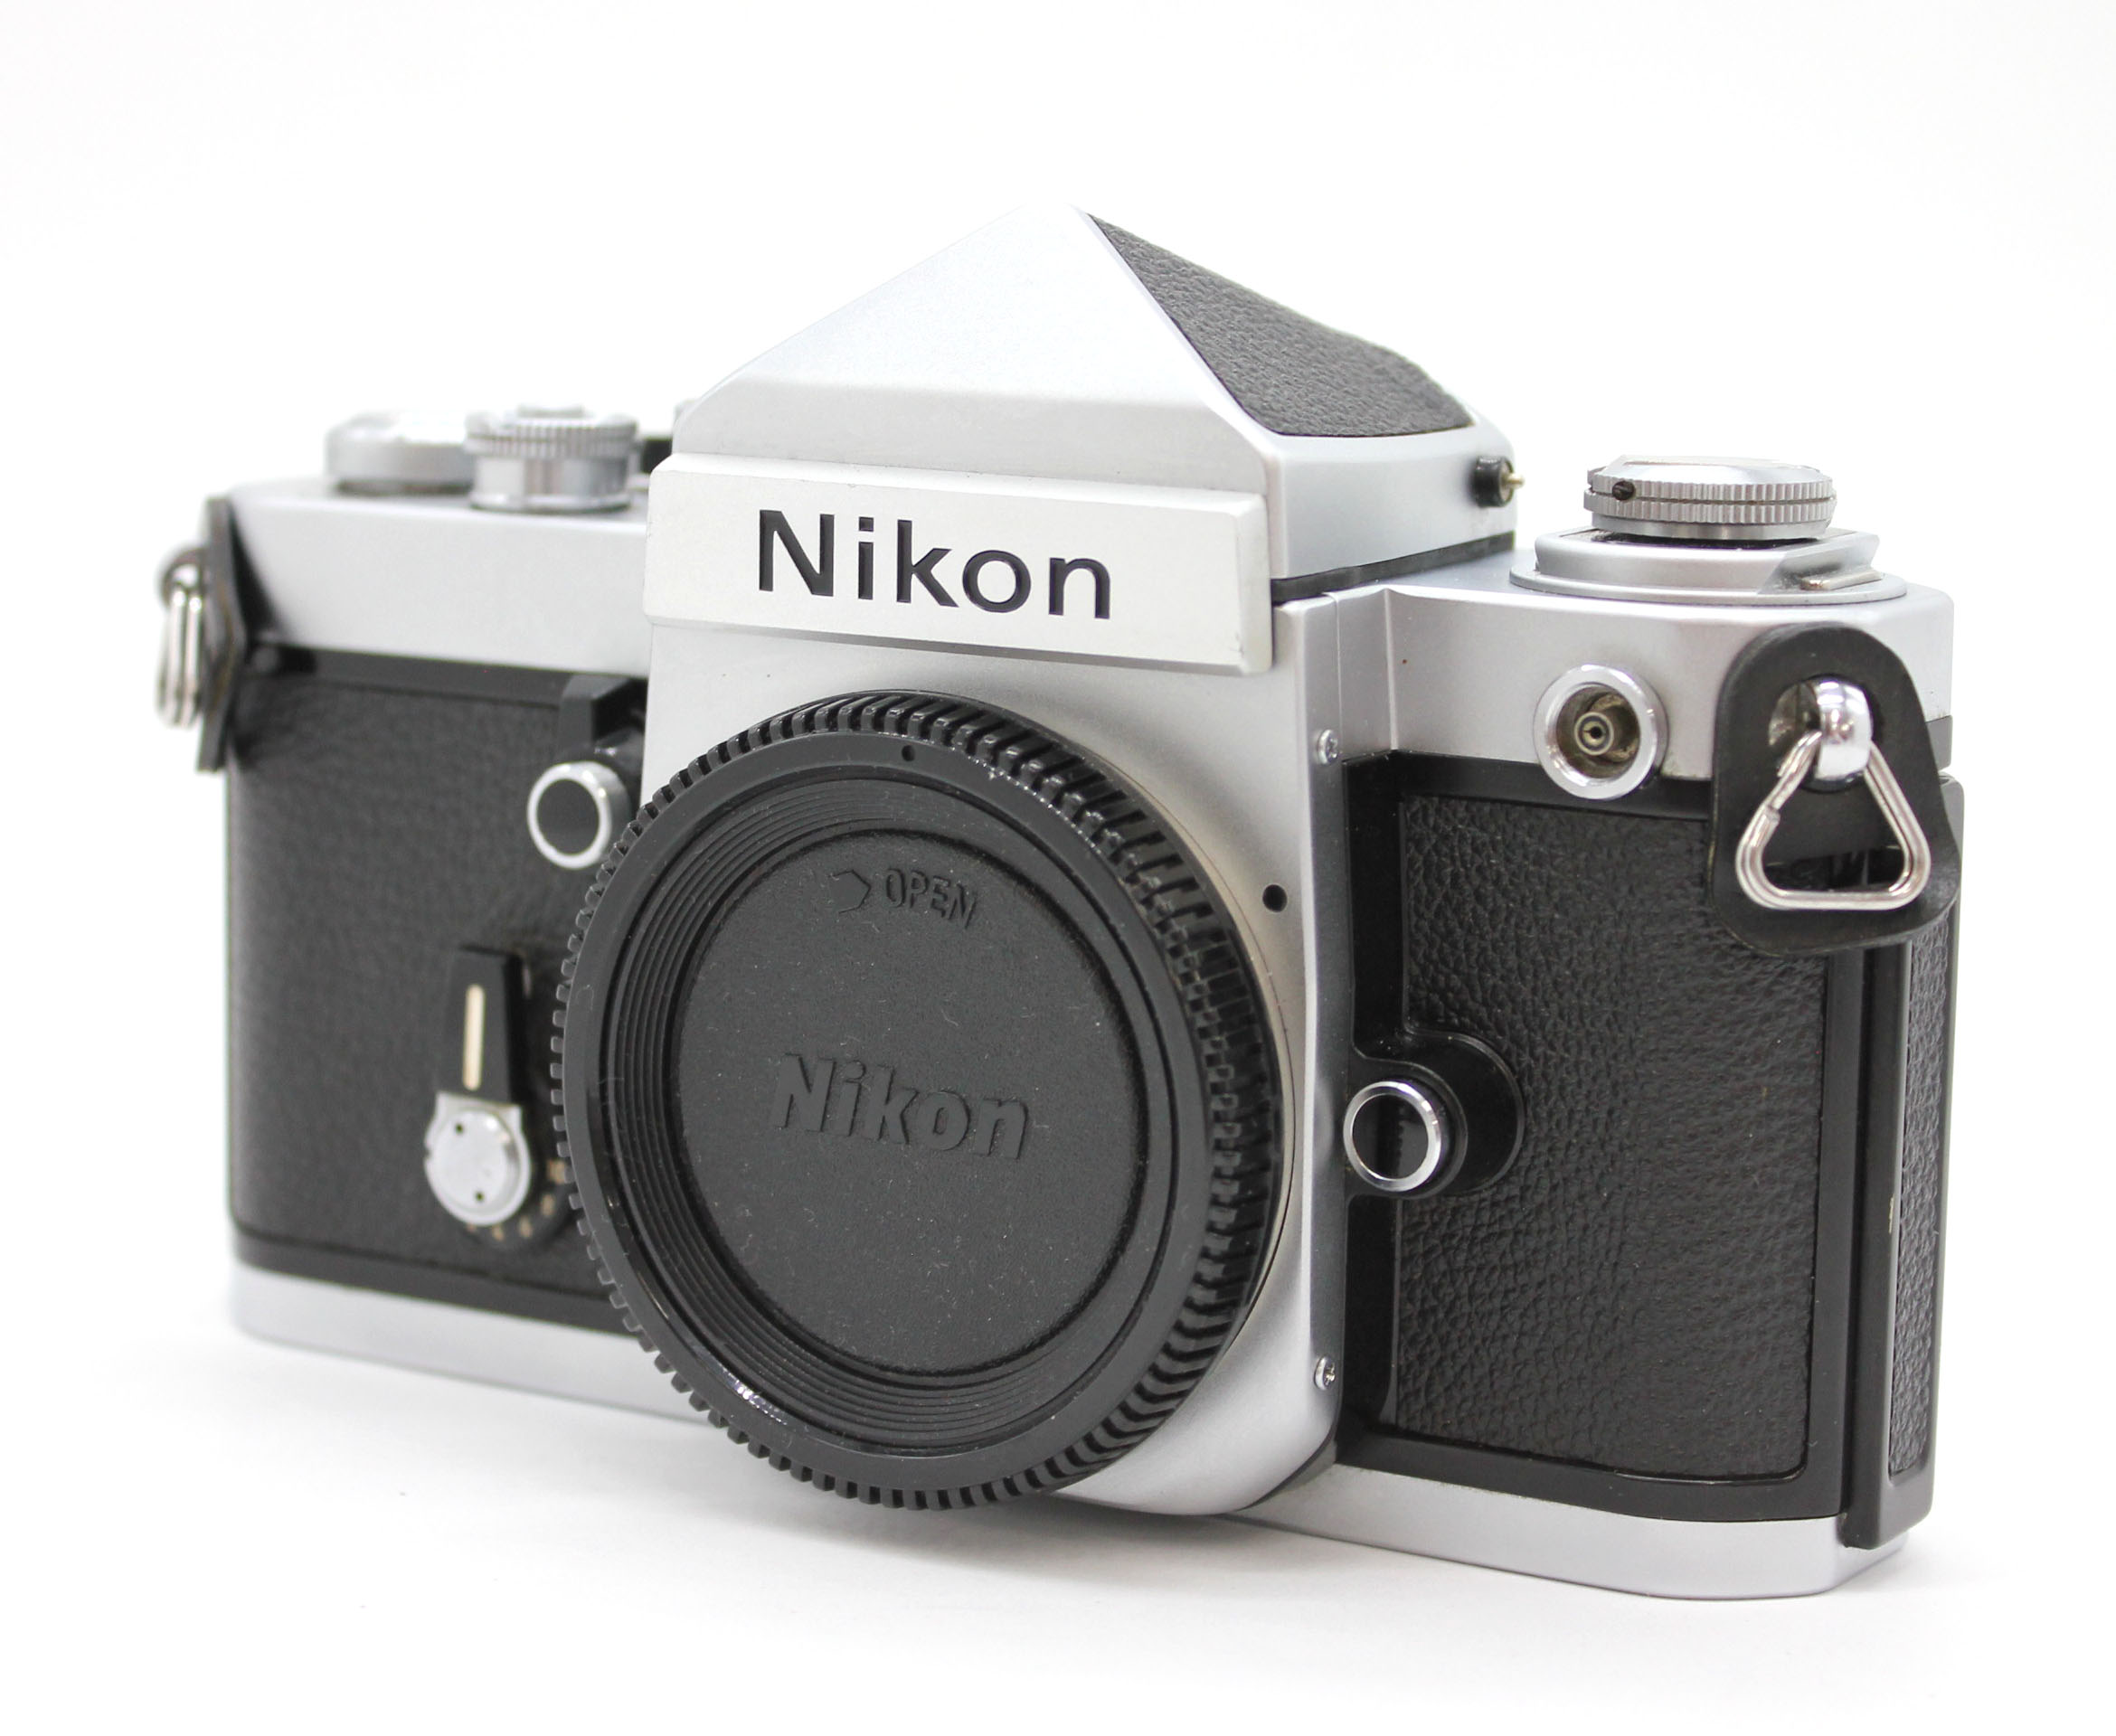  Nikon F2 Eye Level 35mm SLR Film Camera S/N 784* w/ DE-1 View Finder from Japan Photo 1